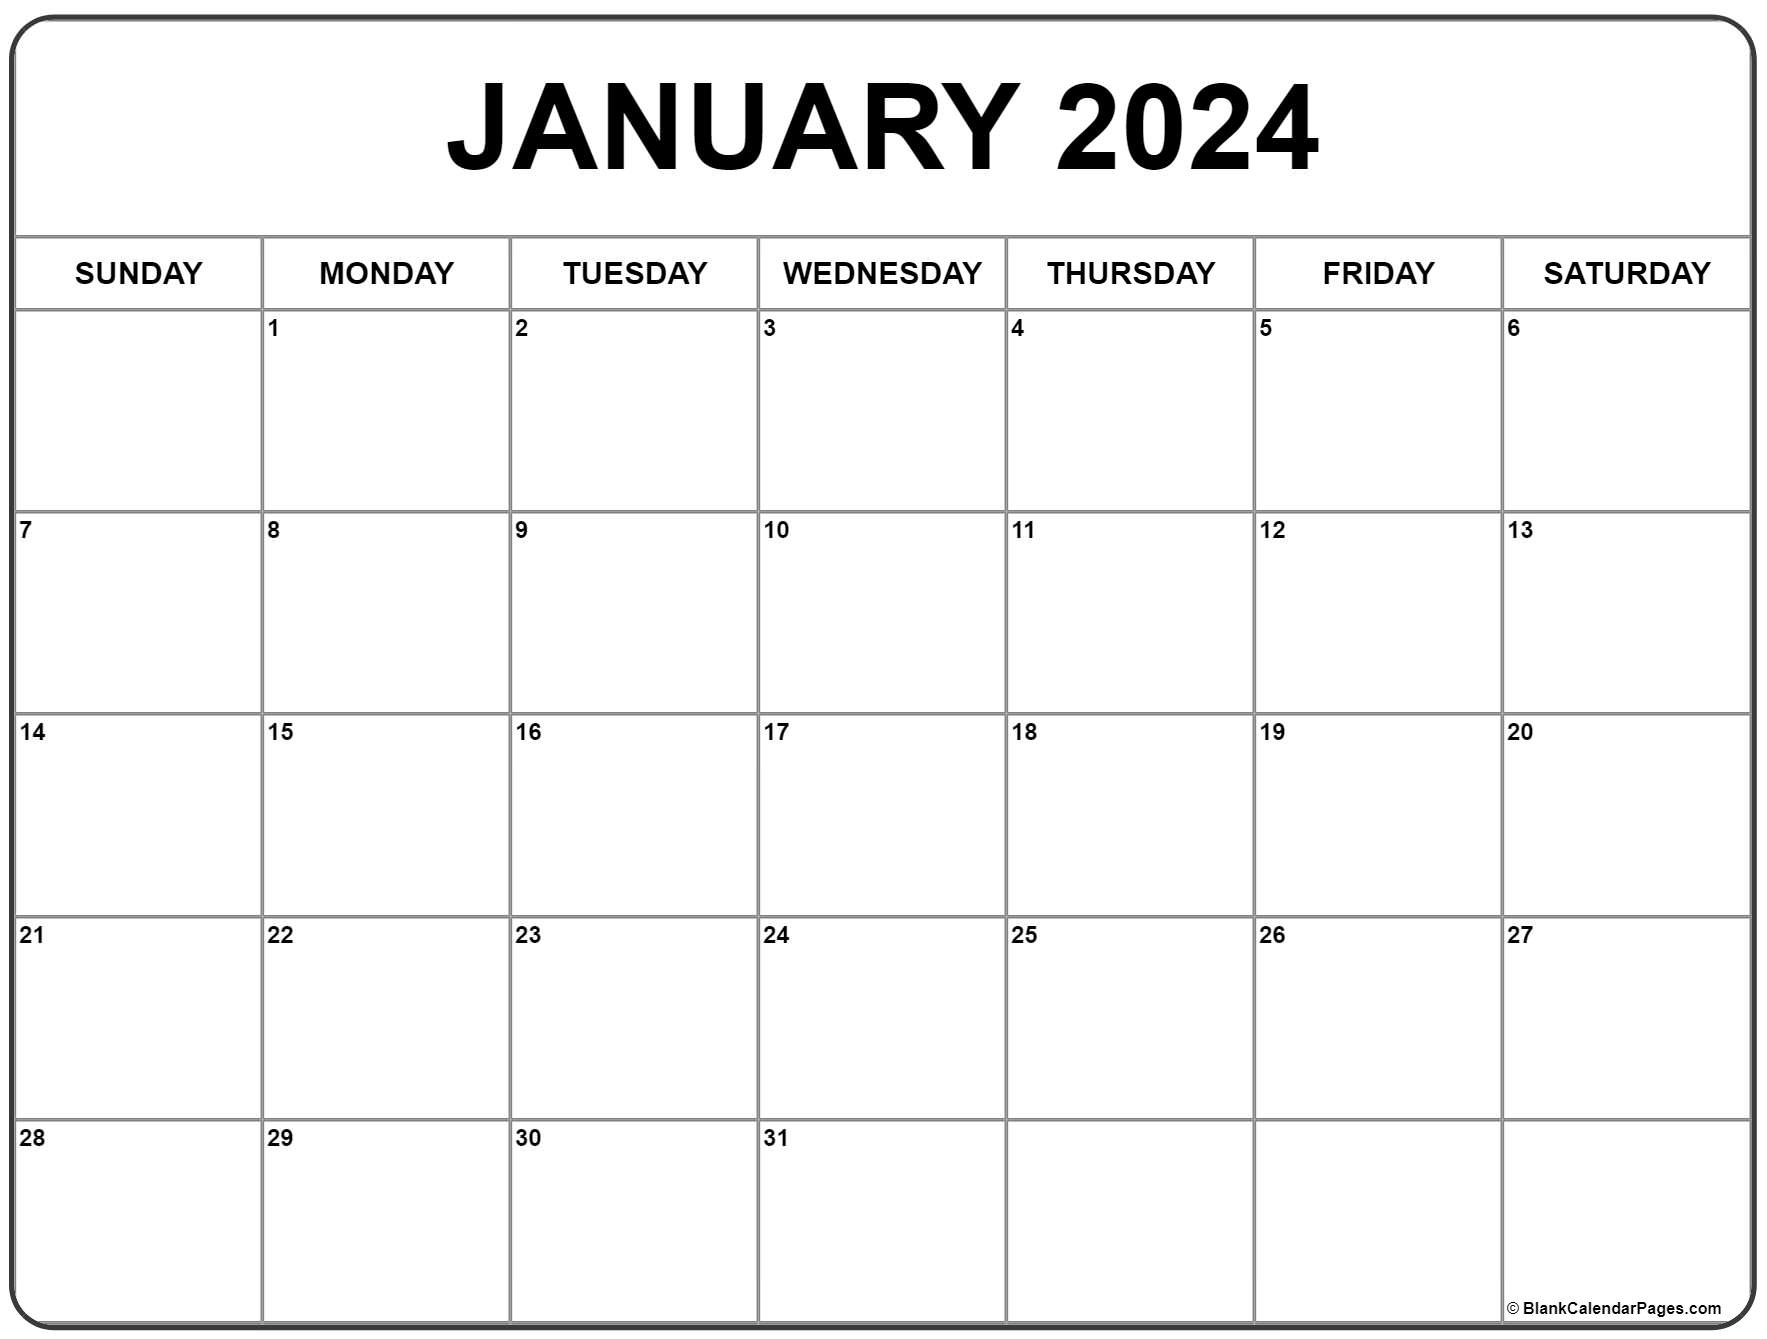 January 2024 Calendar | Free Printable Calendar for Blank January 2024 Calendar Printable